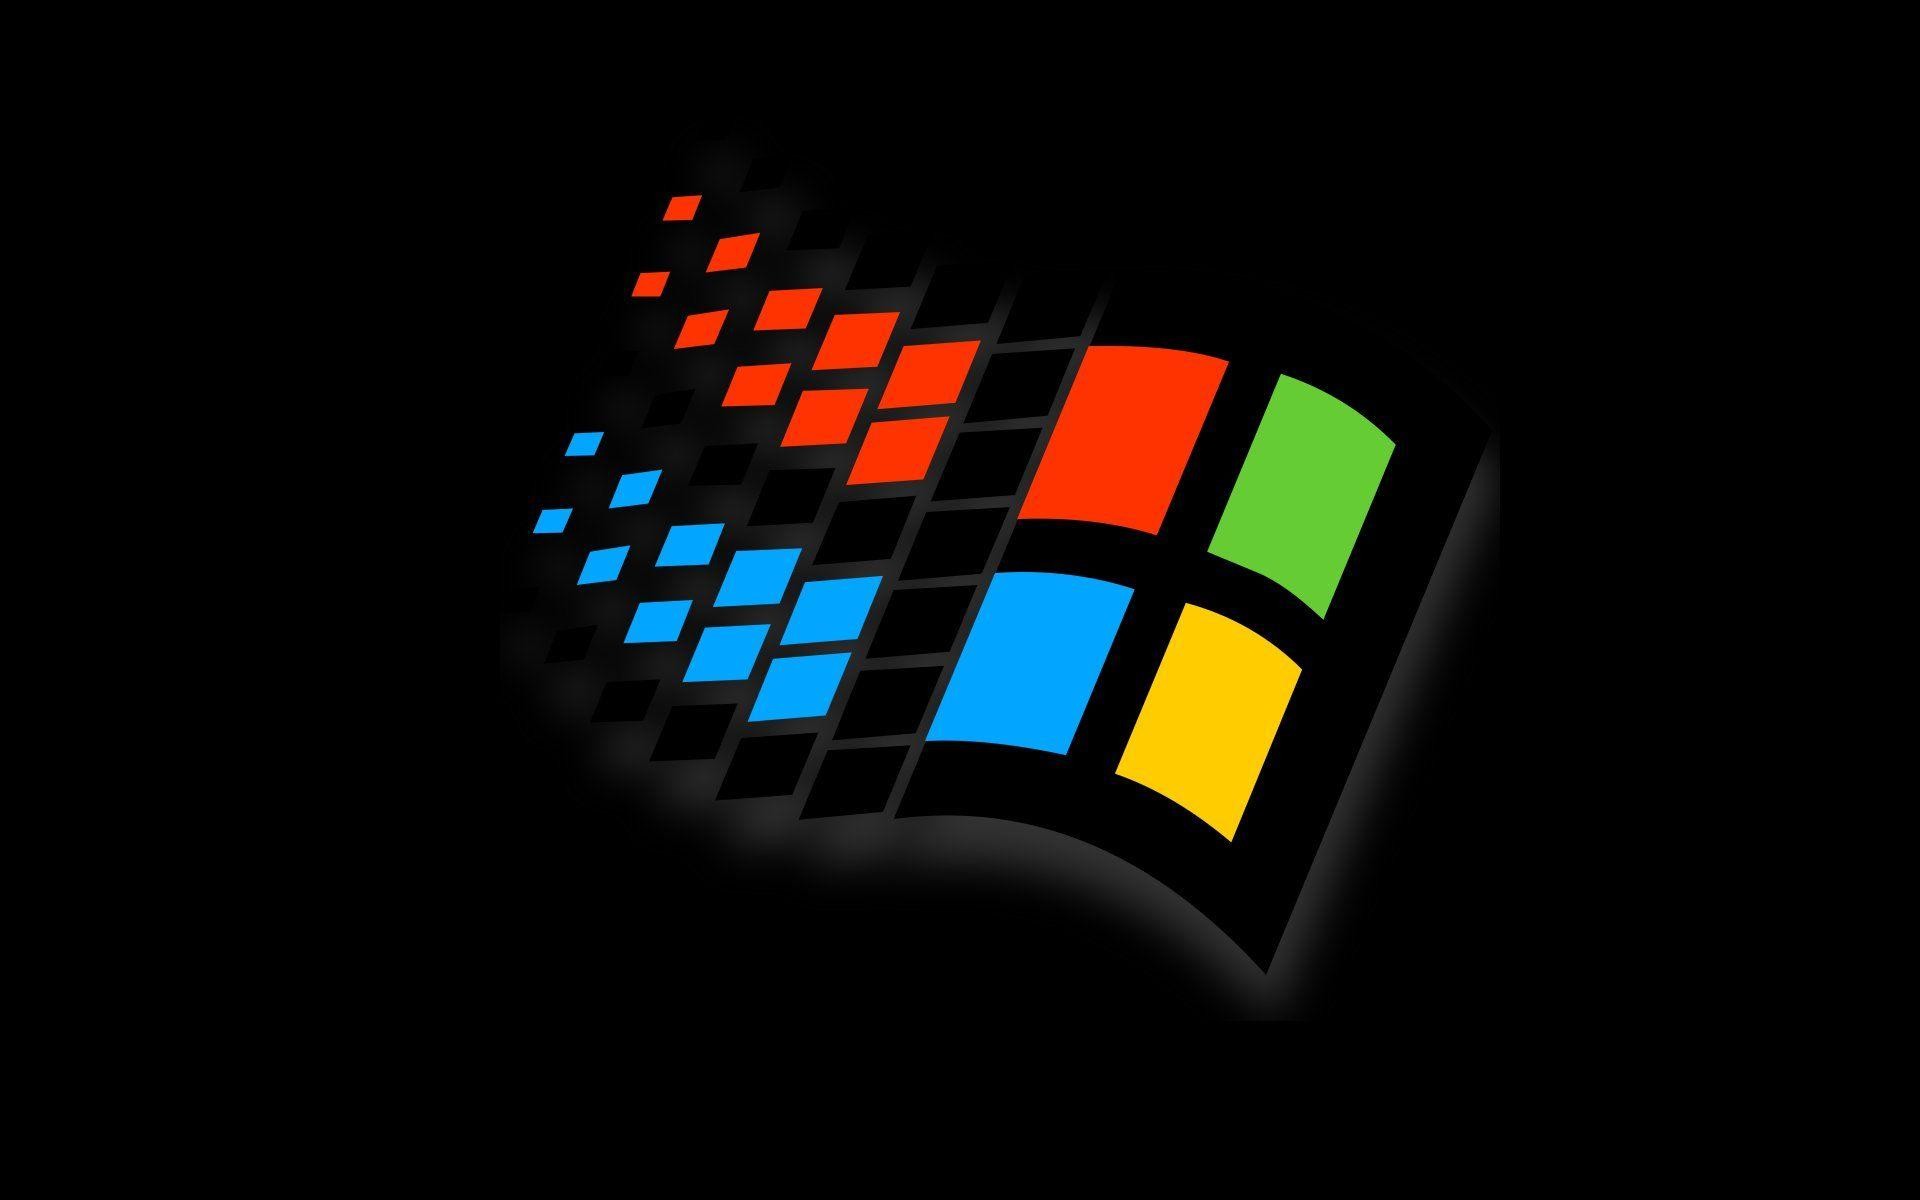 windows 95 wallpaper,logo,graphic design,graphics,font,rubik's cube